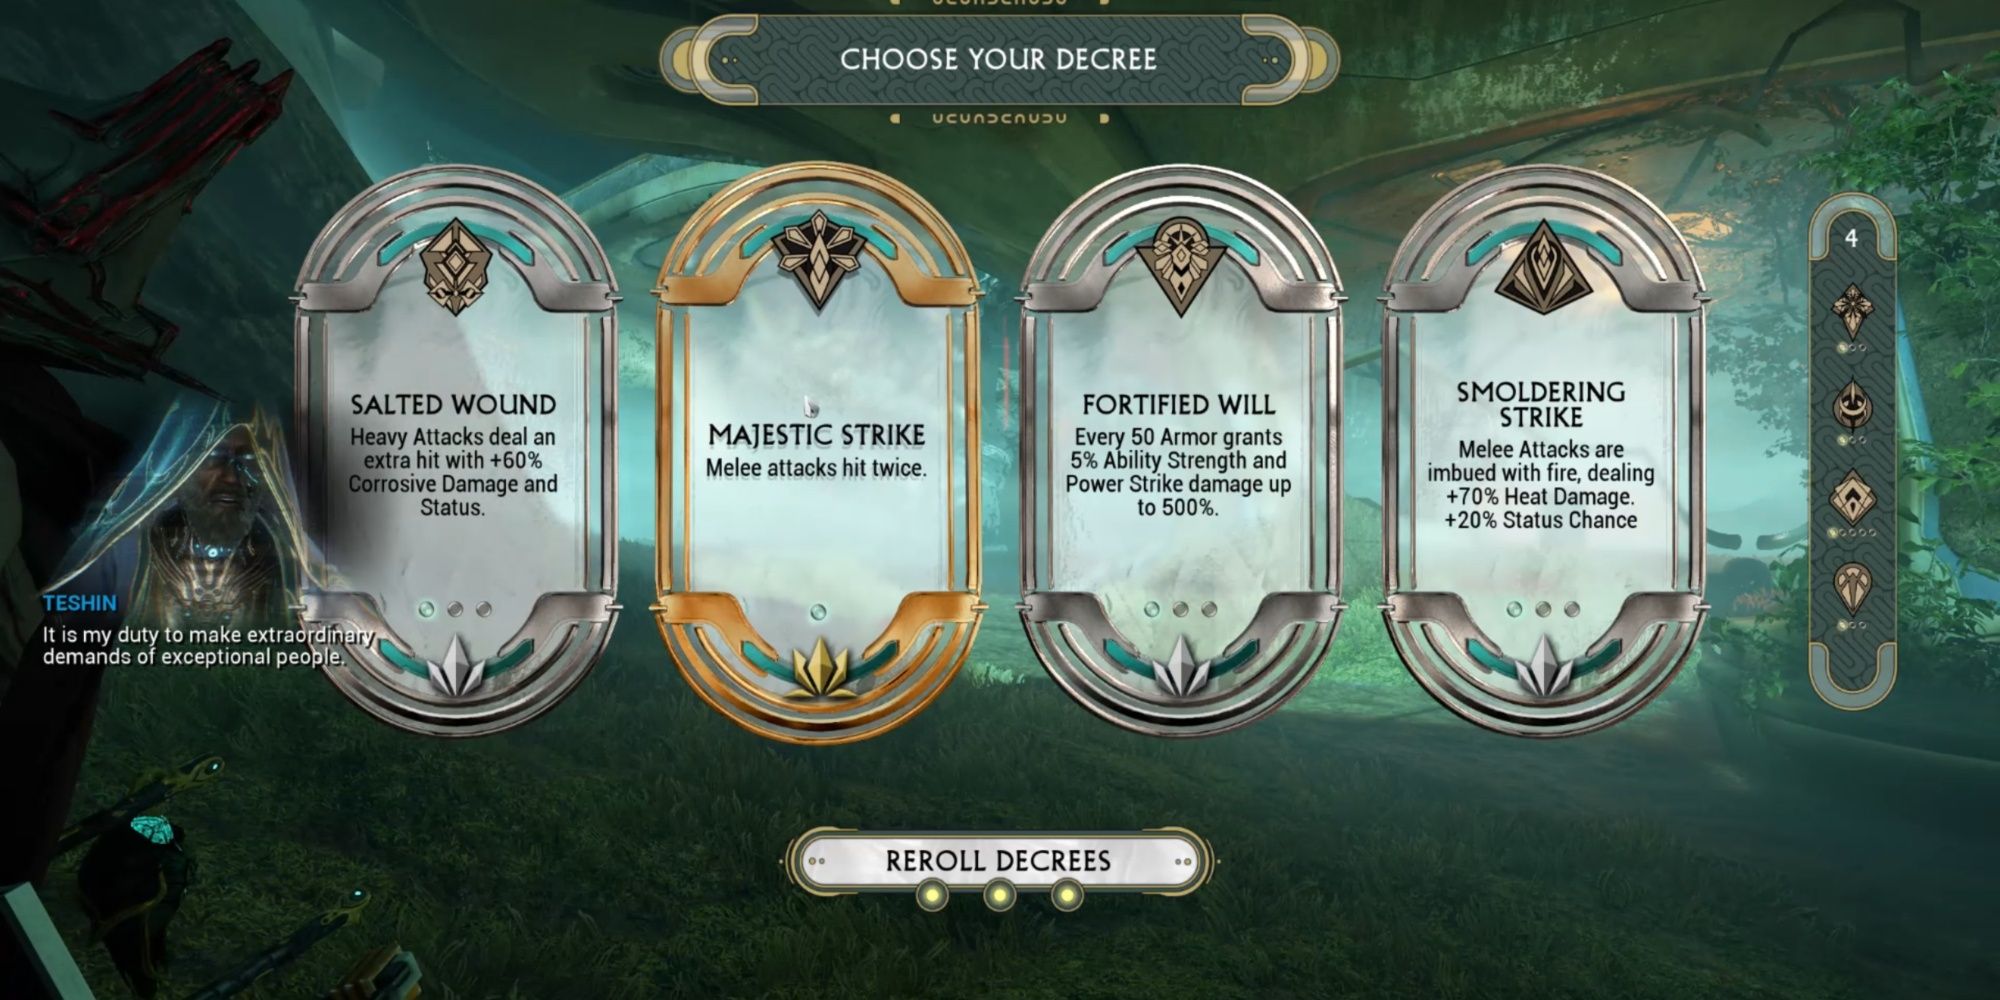 Warframe Majestic Strike, a rare decree, seen in the "Choose Your Decree" screen.